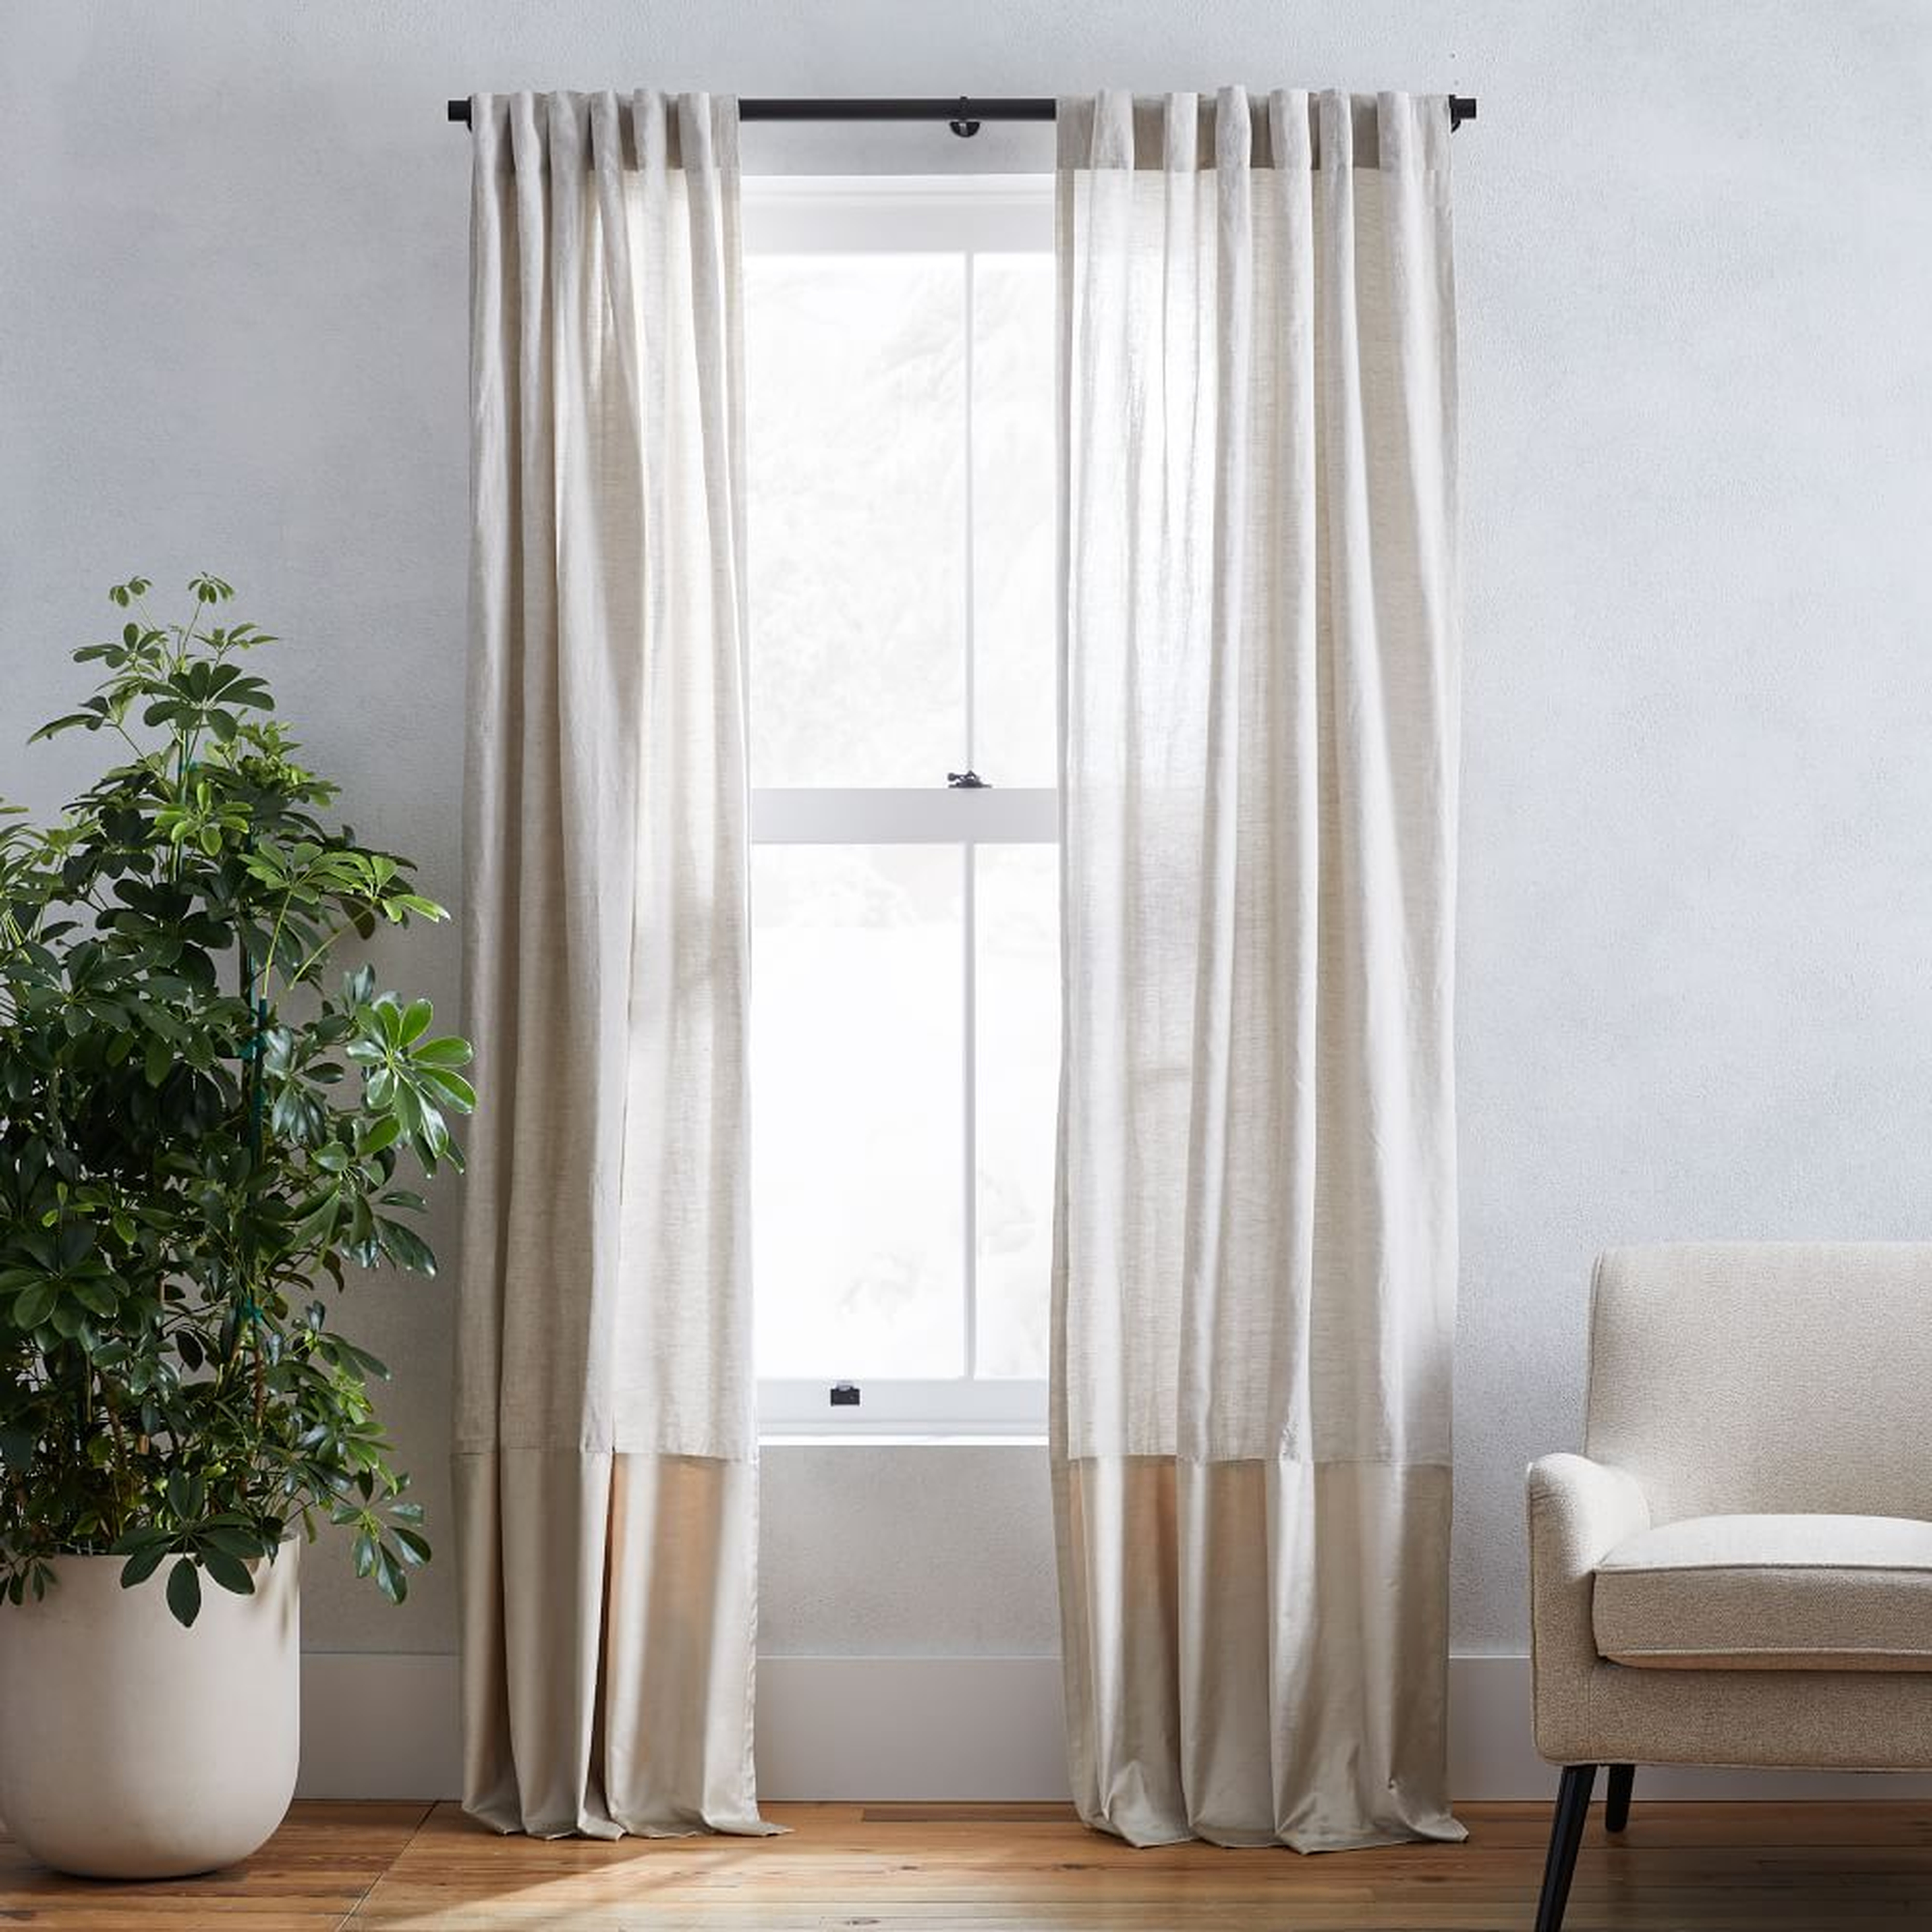 European Linen and Luster Velvet Curtain, Natural/Sand, 48"x108", Set of 2 - West Elm